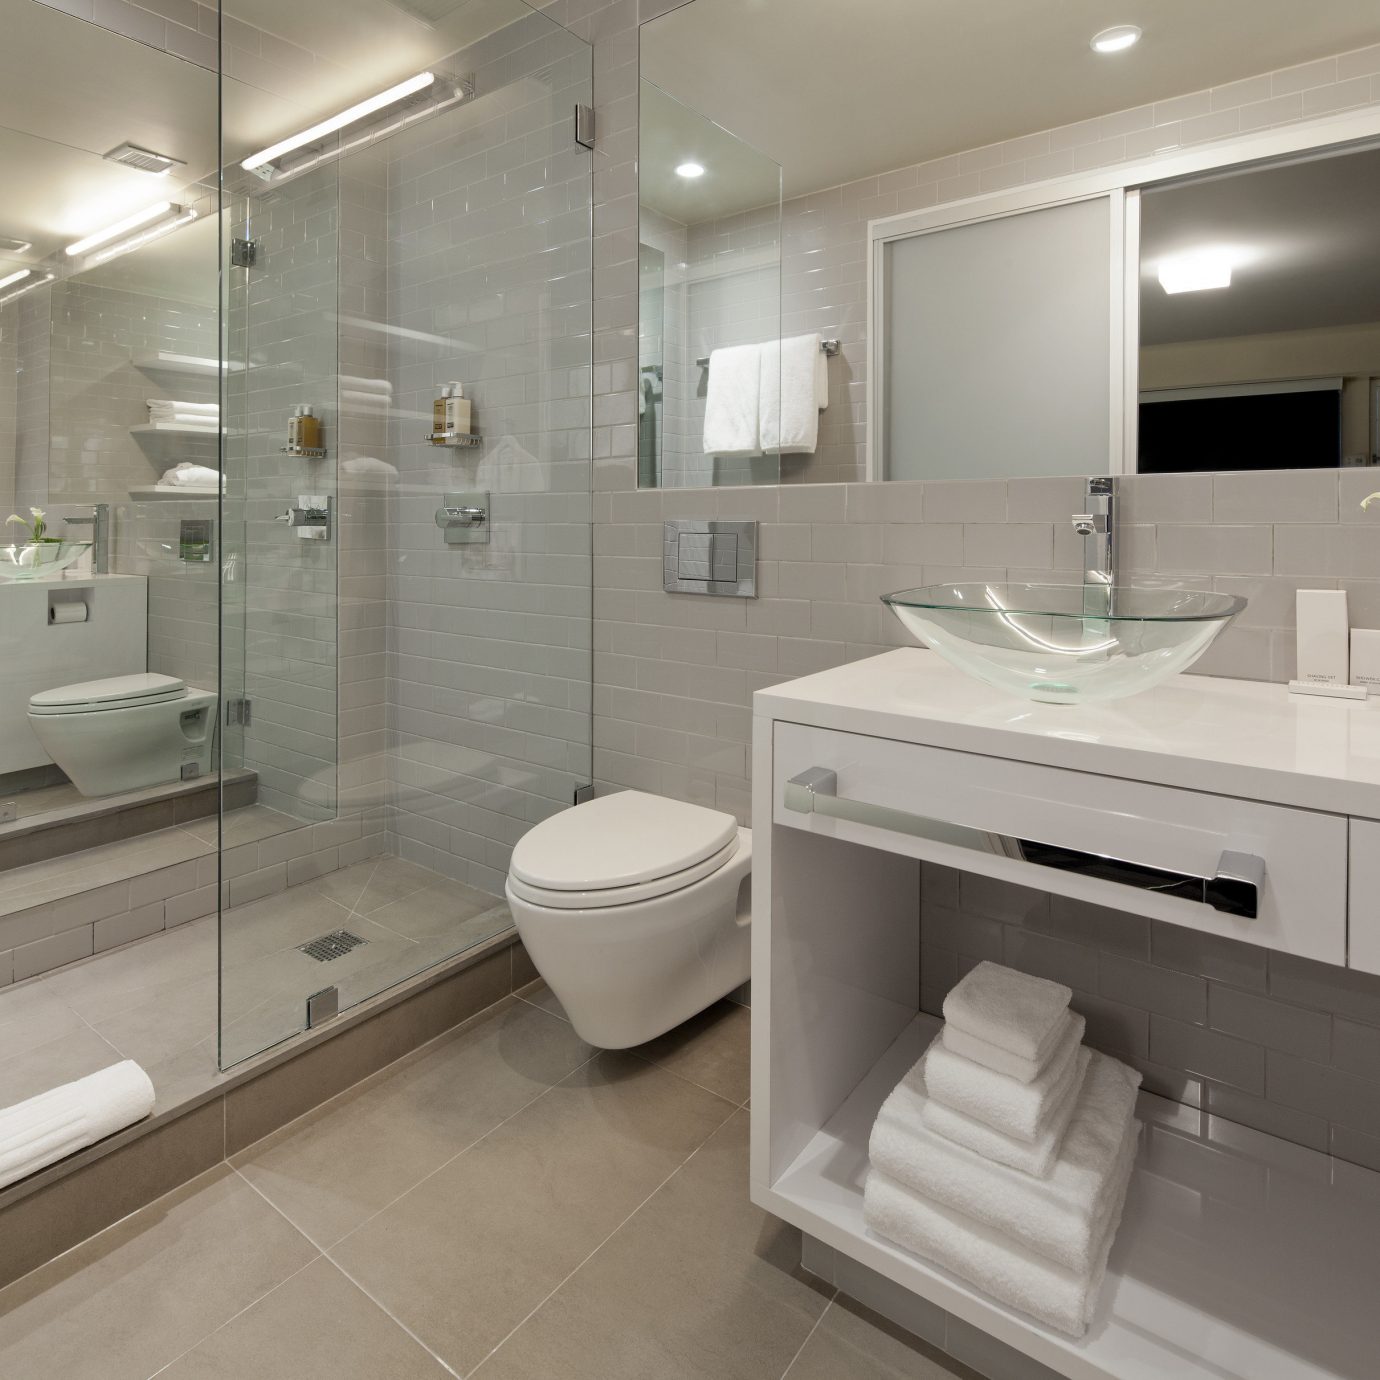 bathroom sink mirror property home flooring toilet bidet tub tile